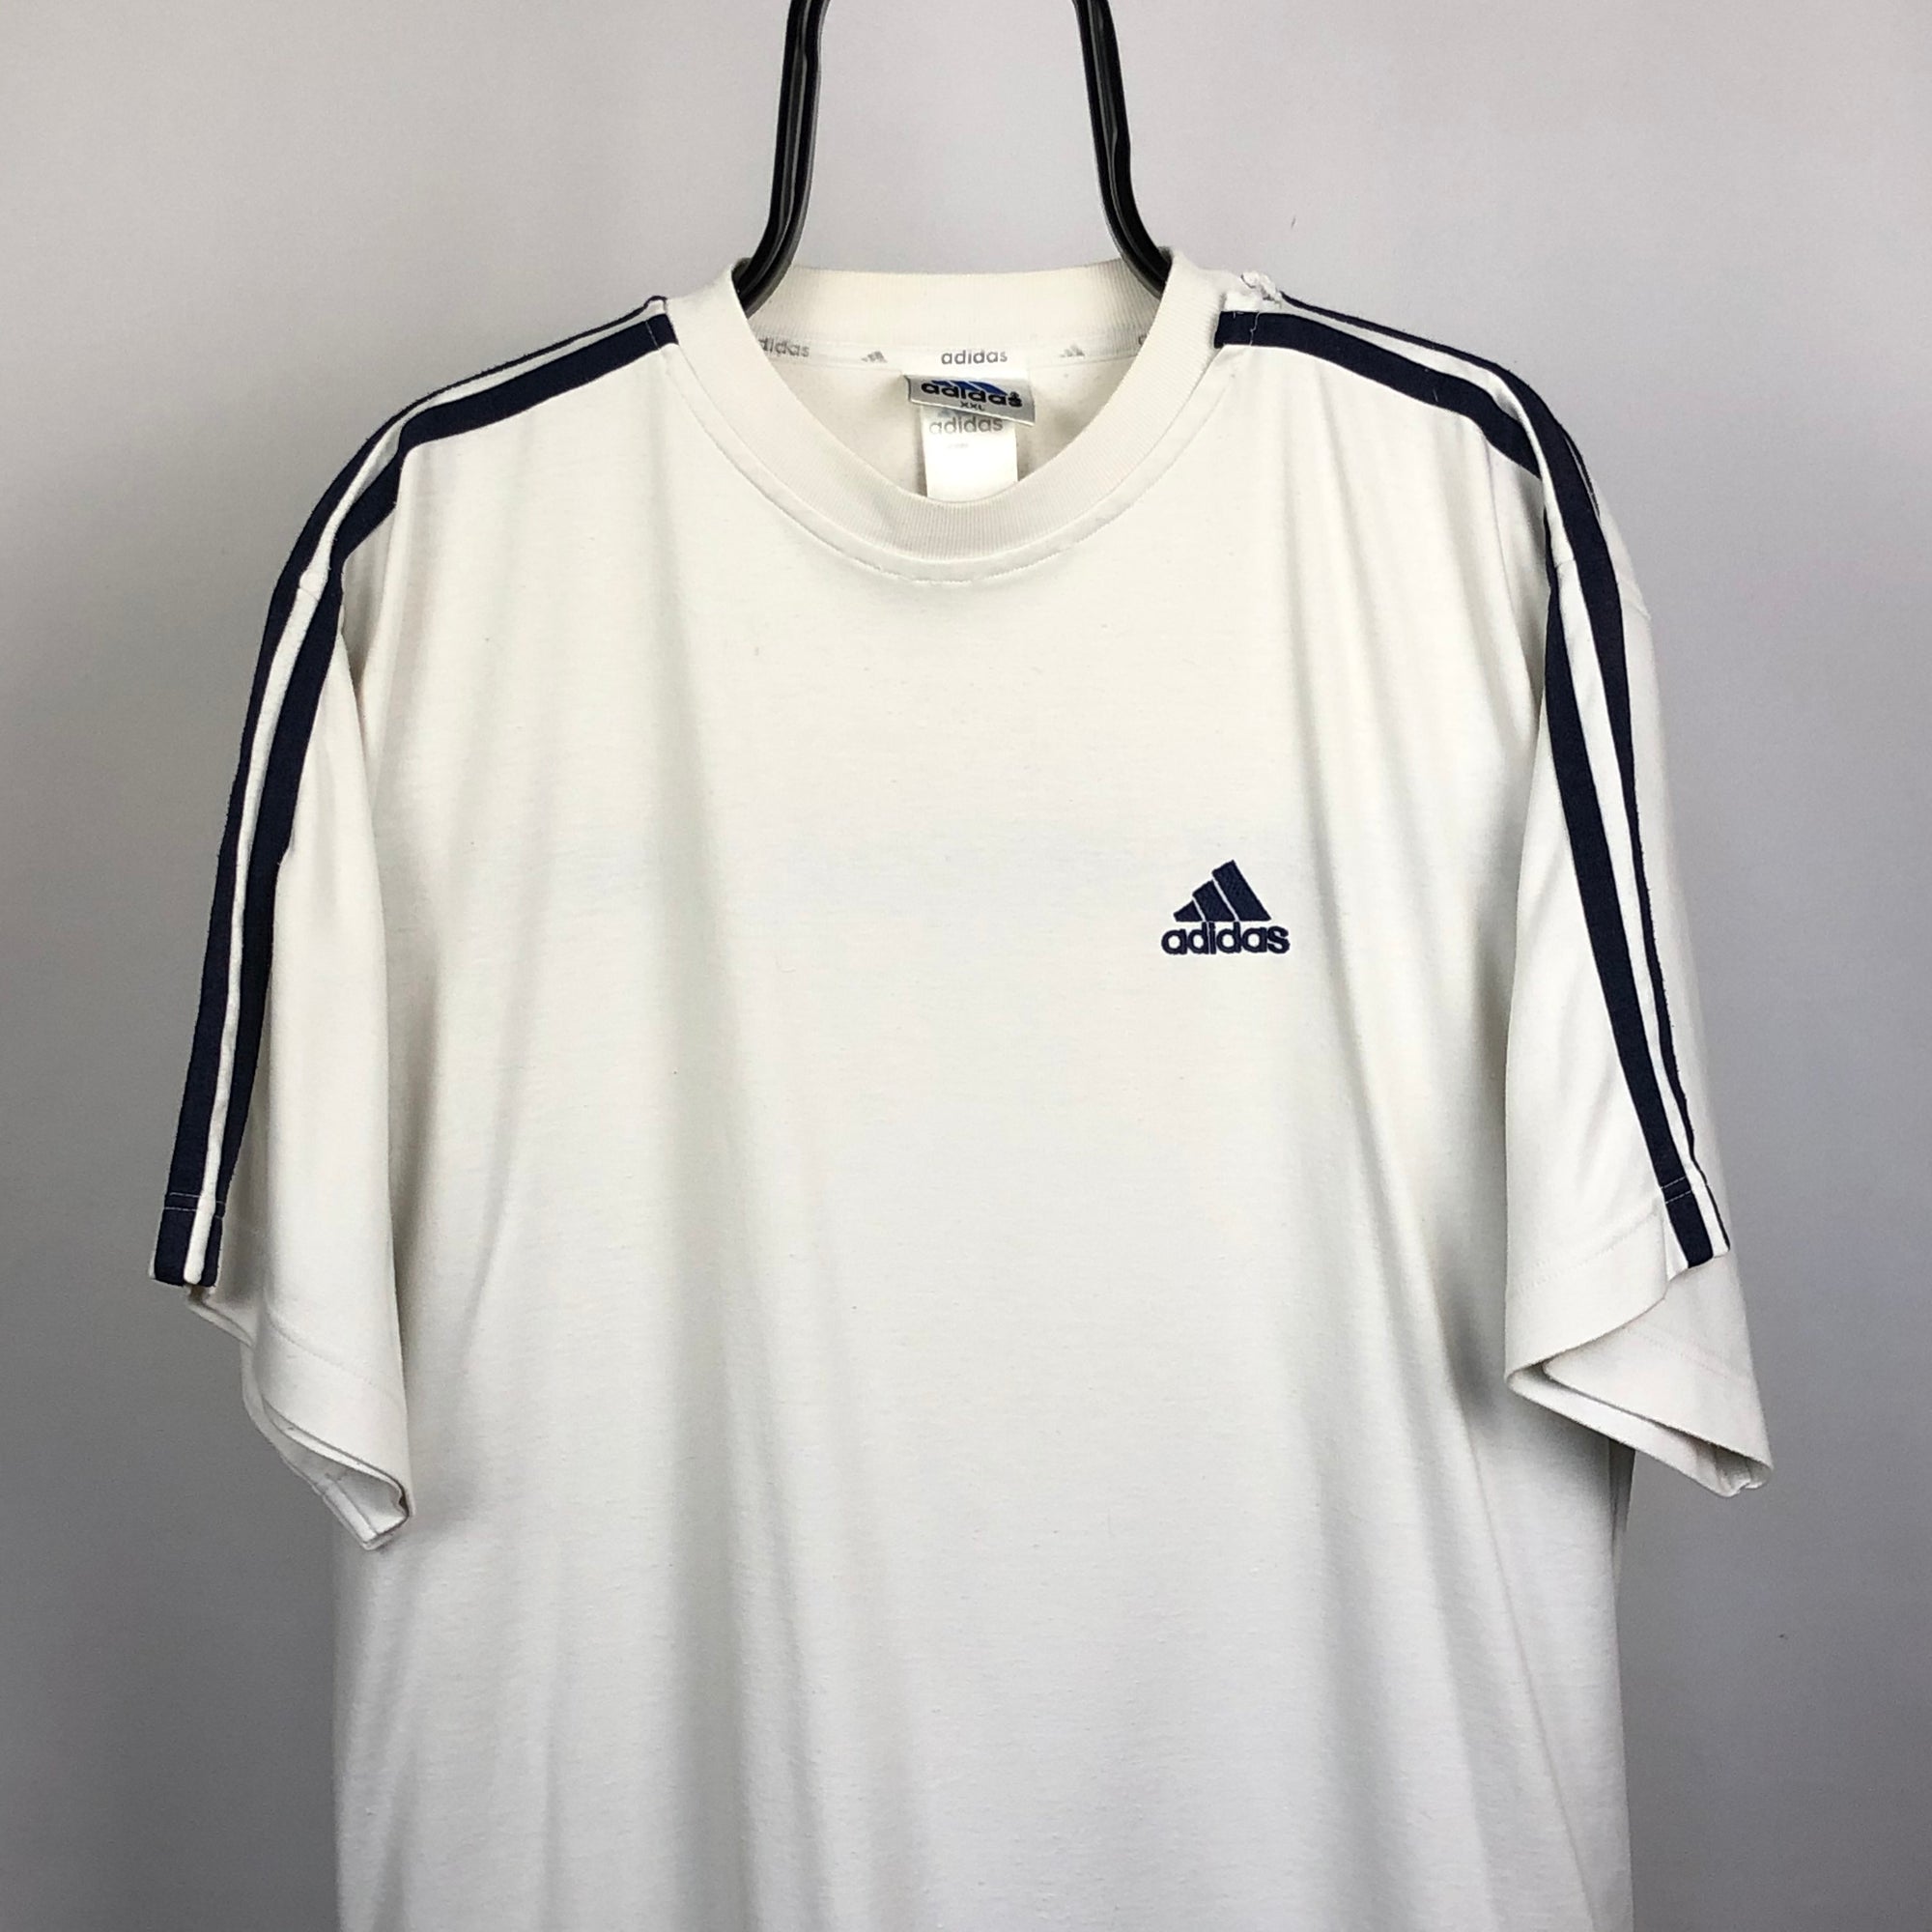 Vintage Adidas Embroidered Small Logo Tee in White - Men's XL/Women's XXL